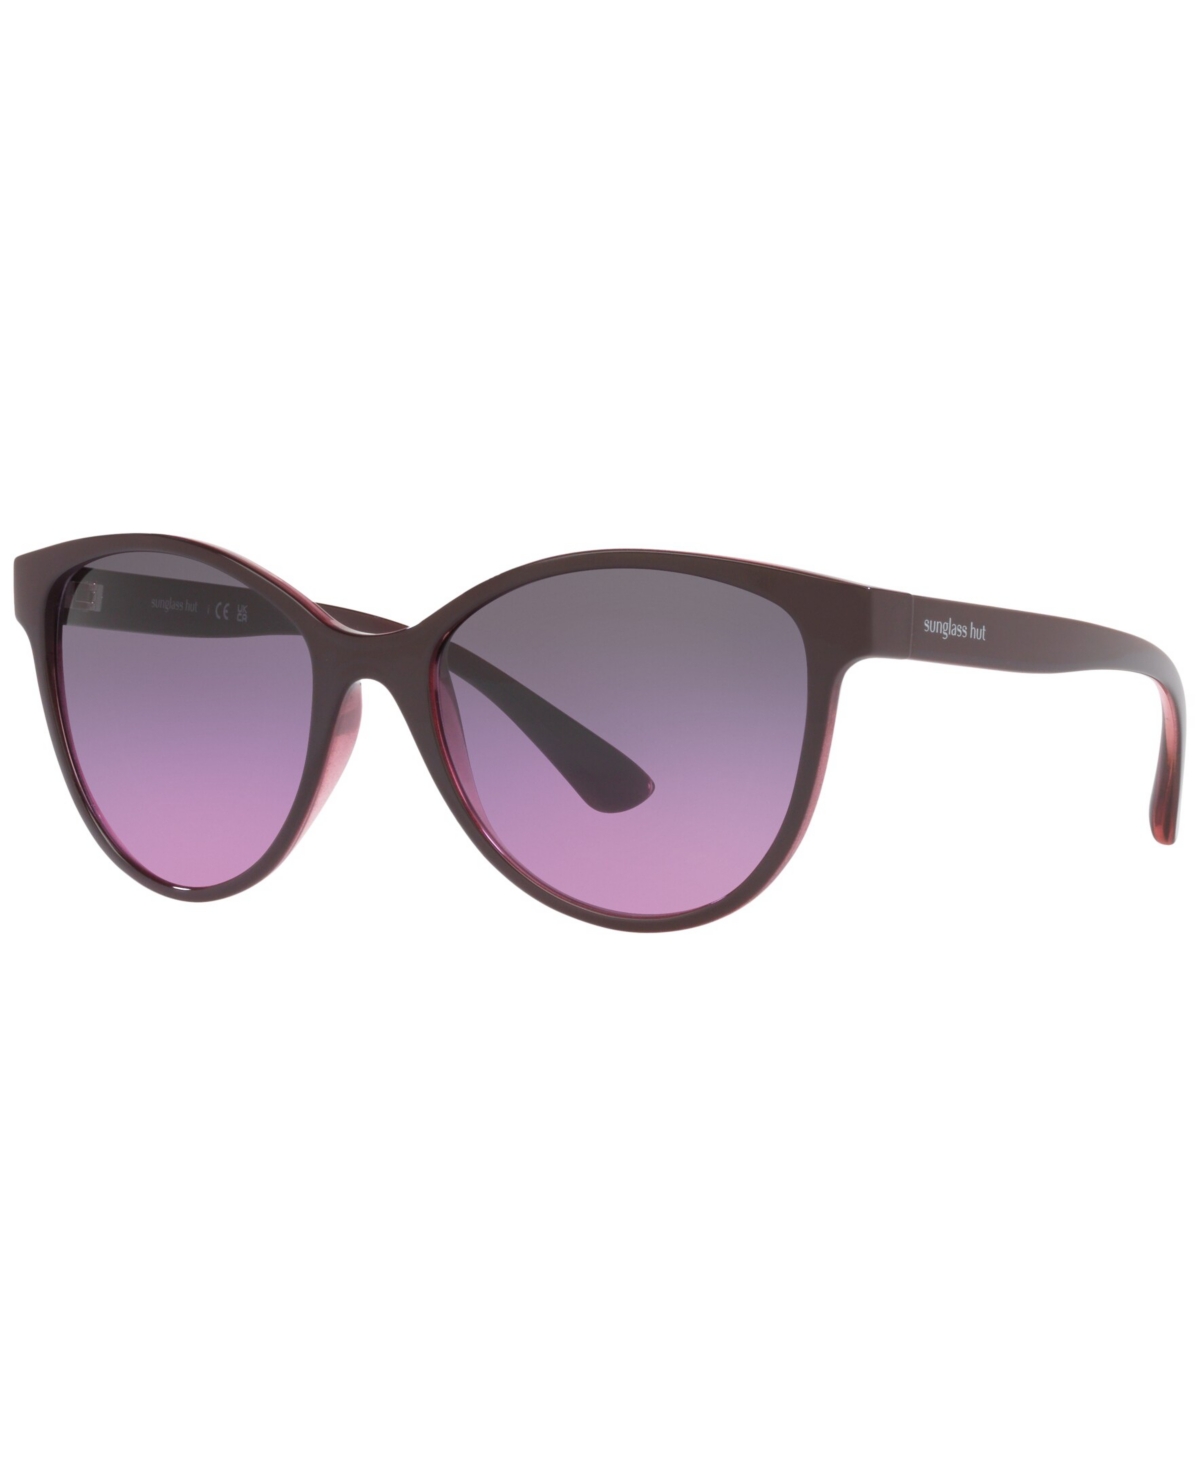 Women's Sunglasses, HU202155-y - Top Brown on Lilla